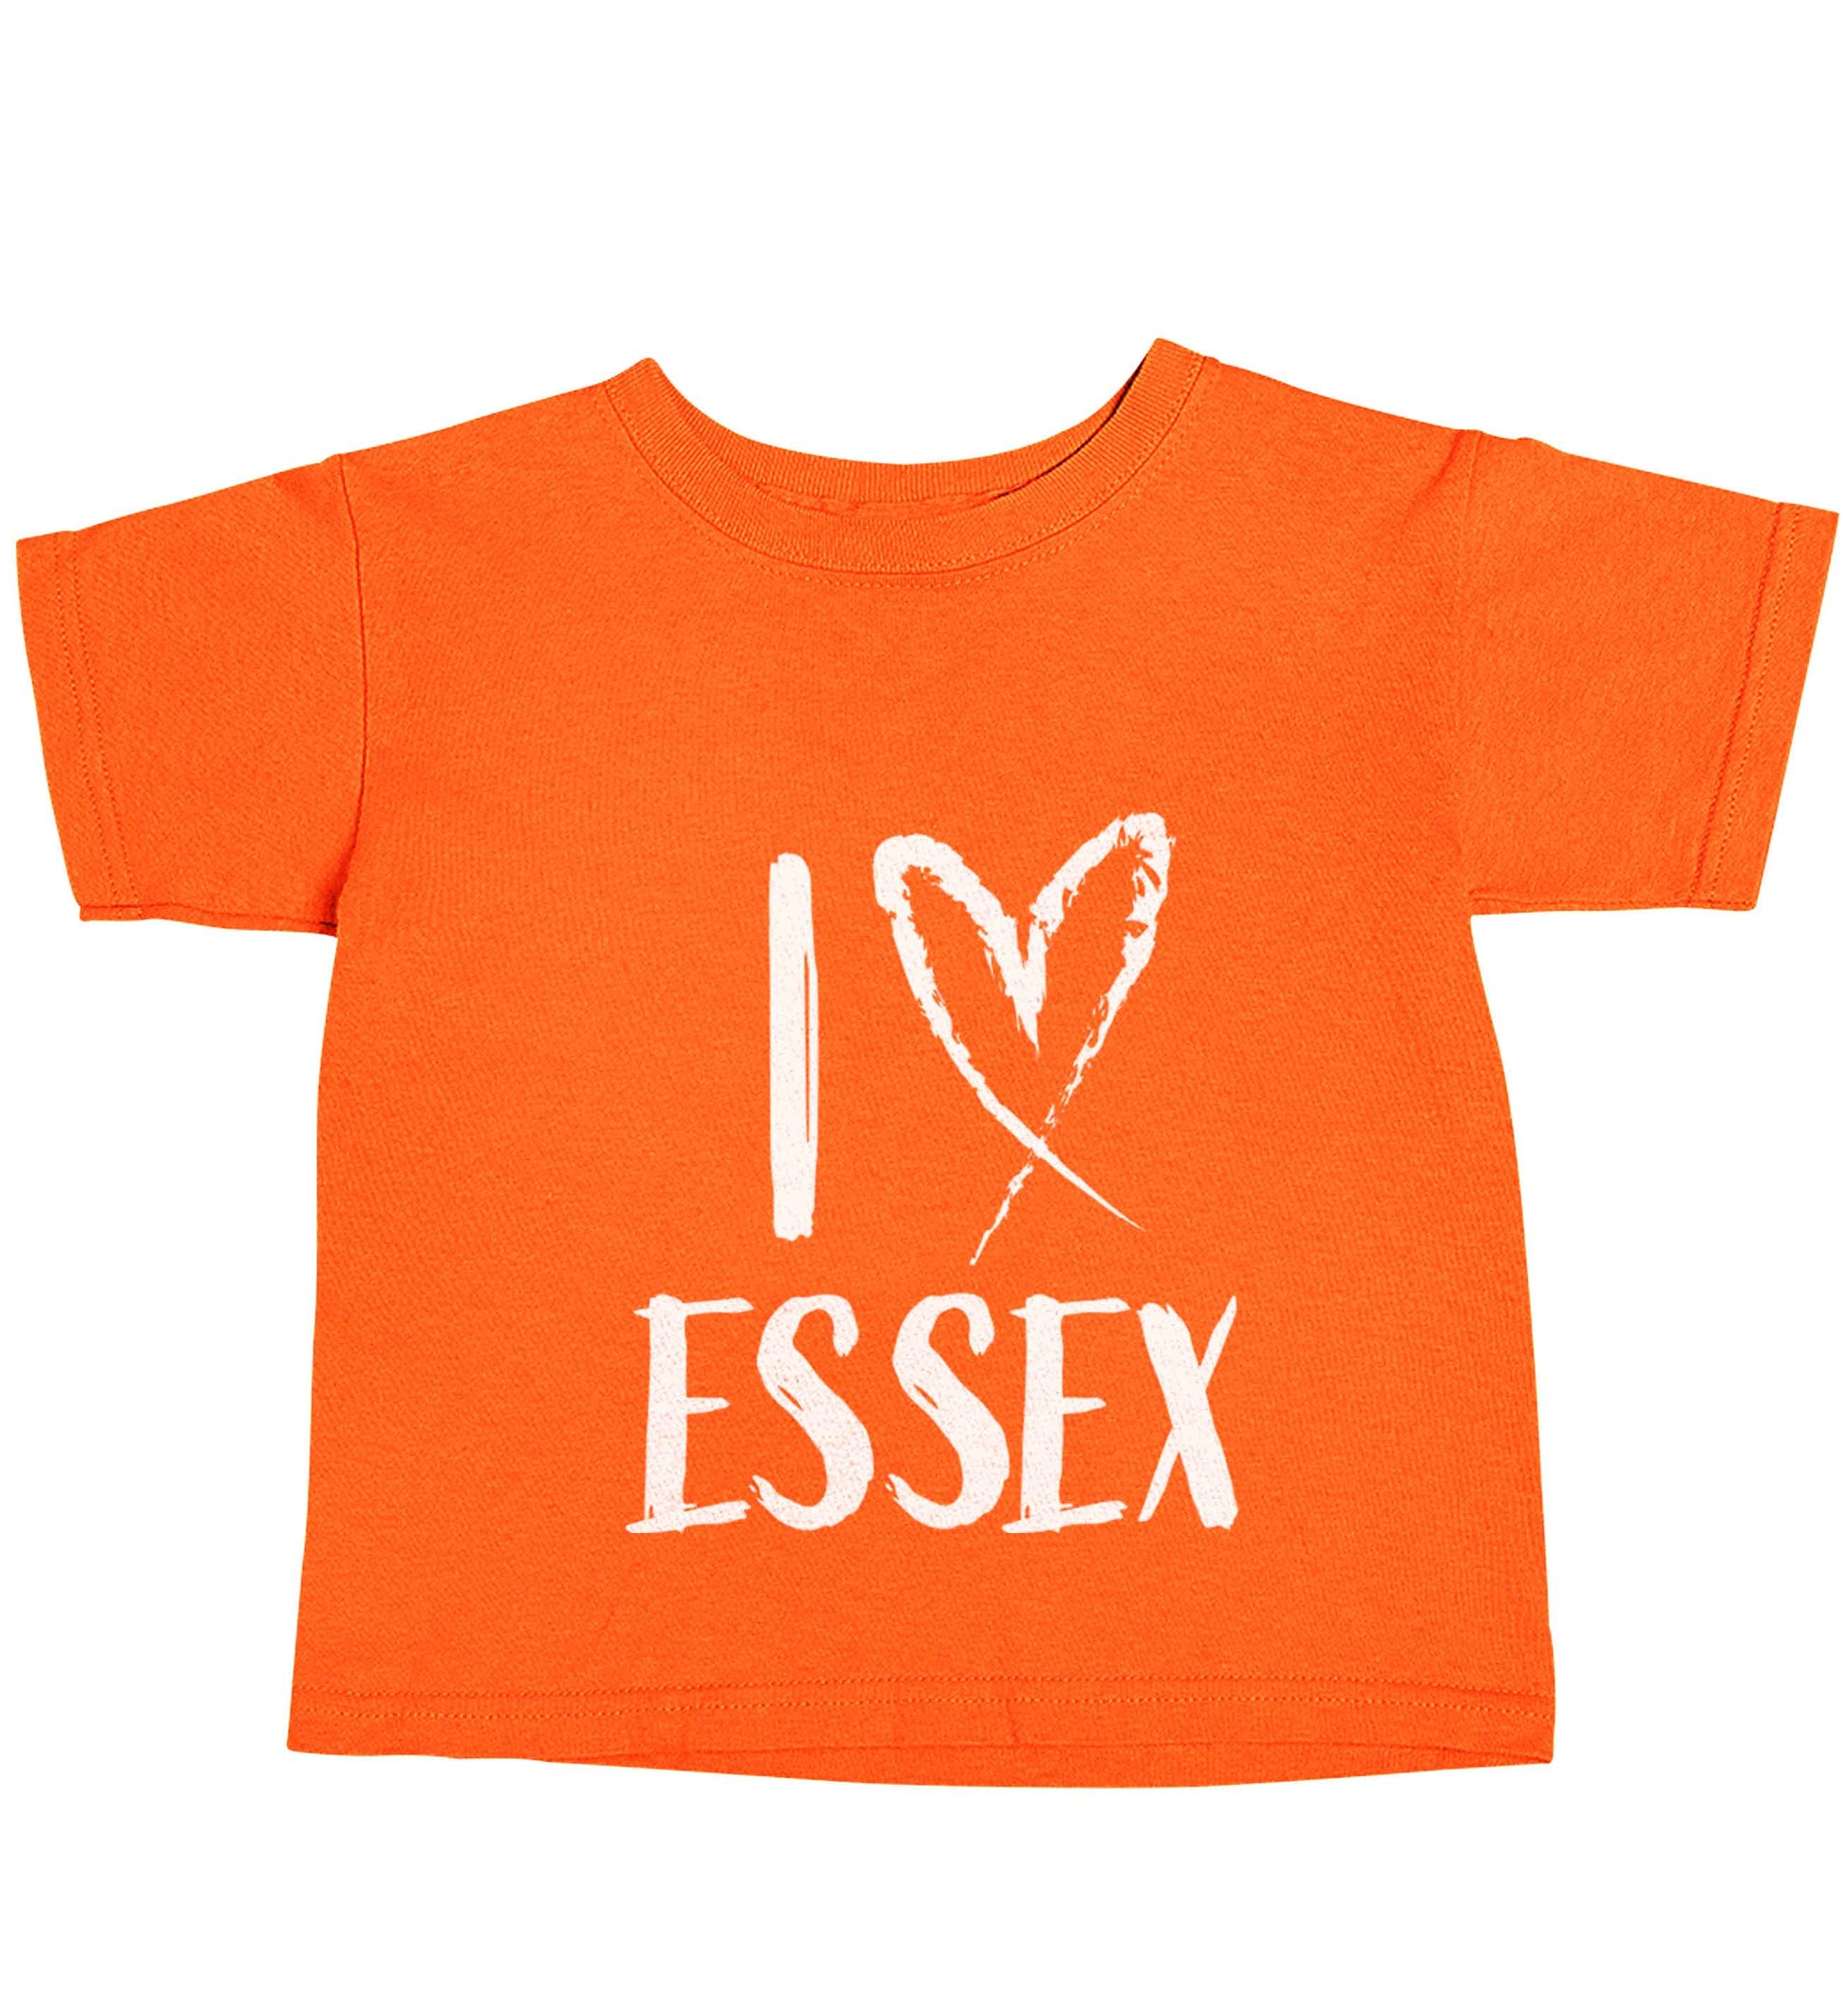 I love Essex orange baby toddler Tshirt 2 Years